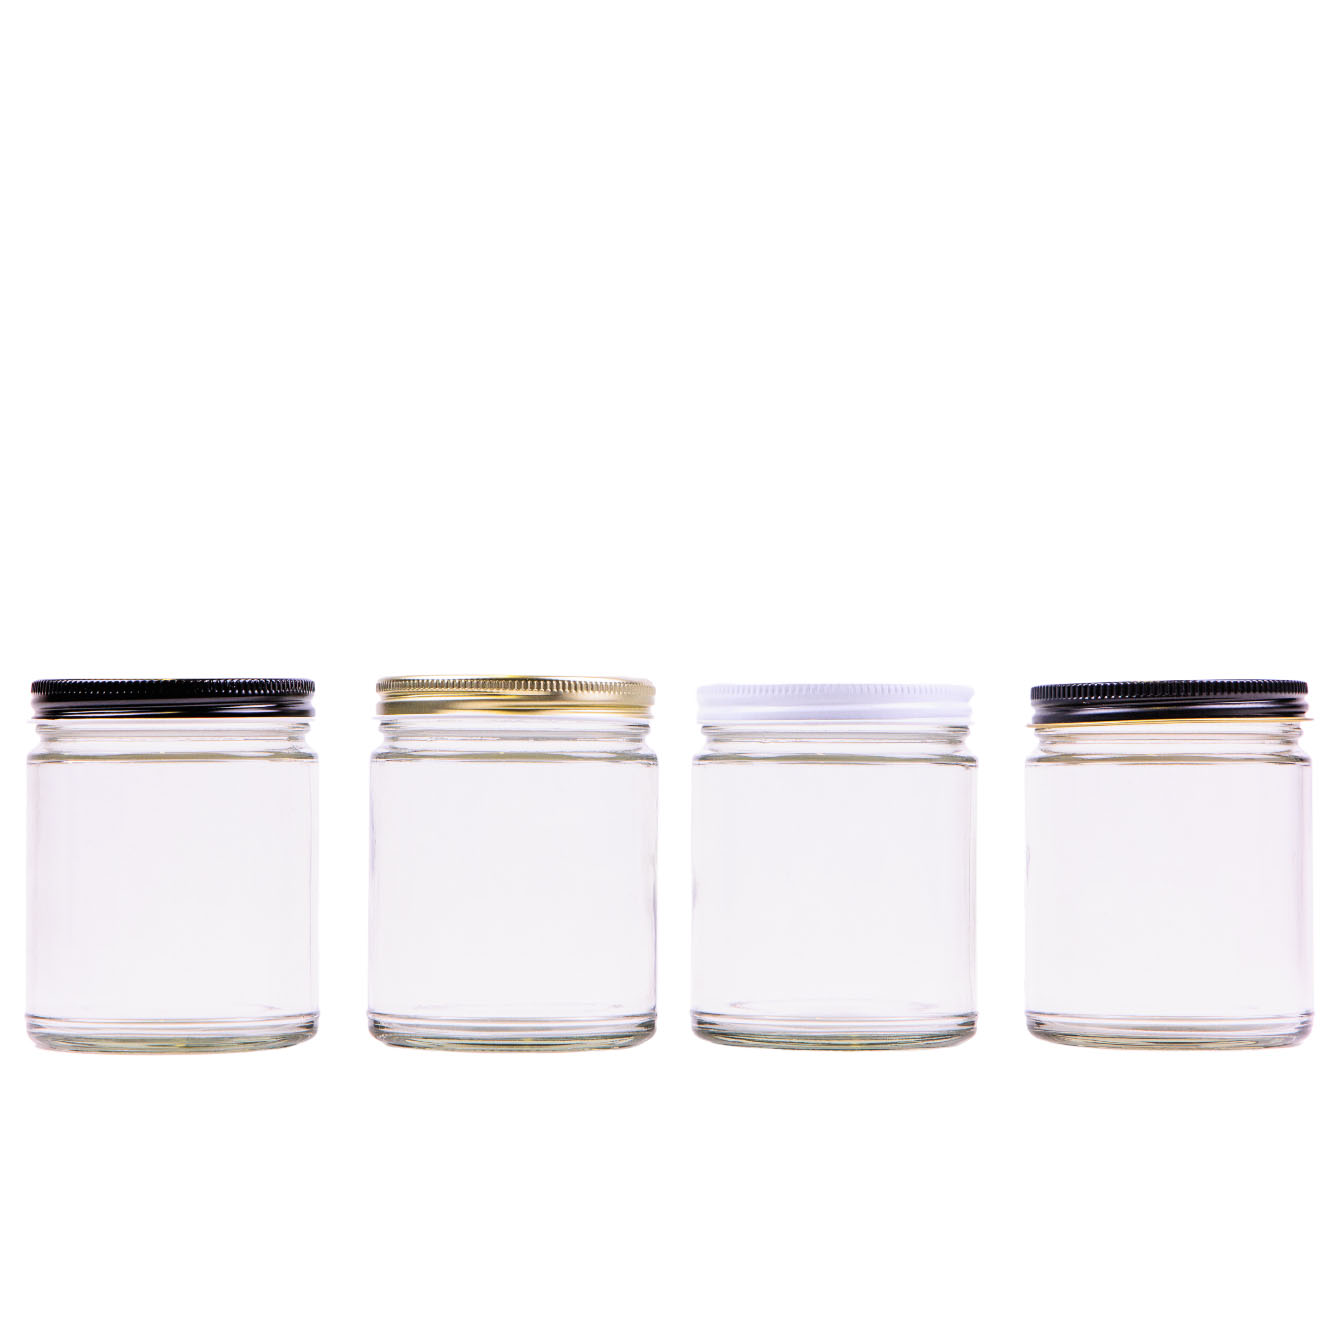 9oz clear glass jars